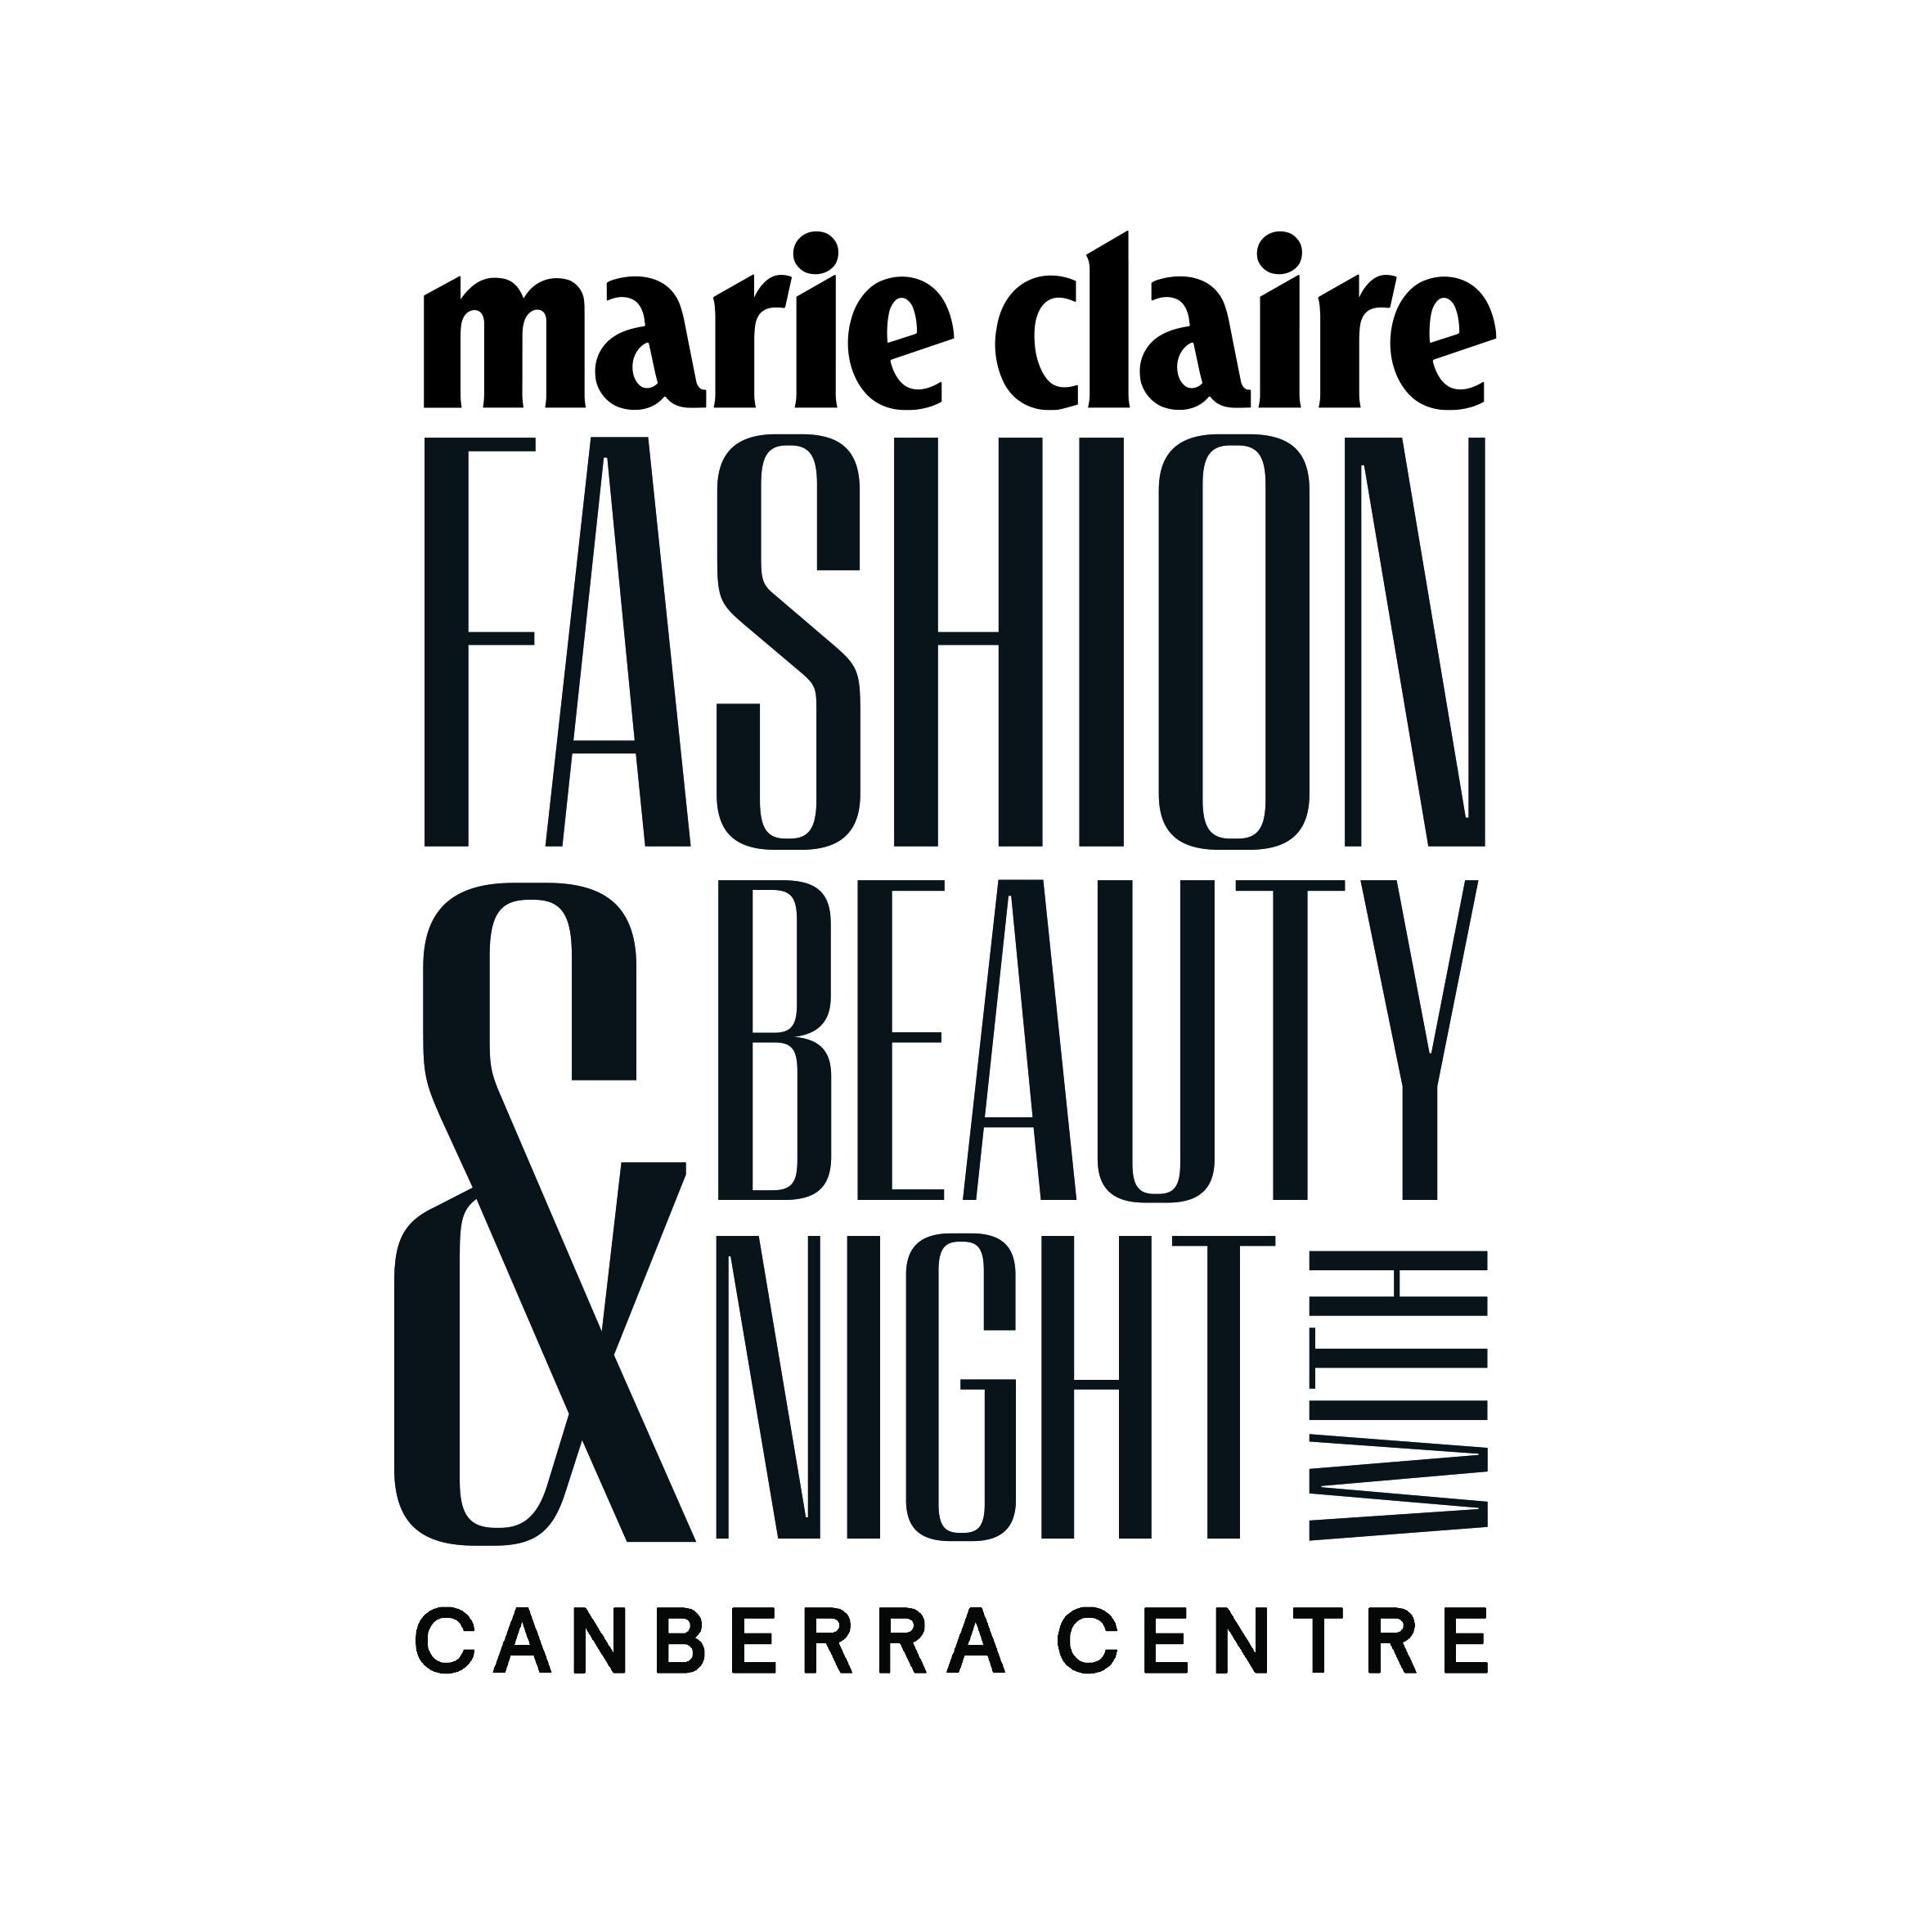 Sponsor logo of Canberra Centre